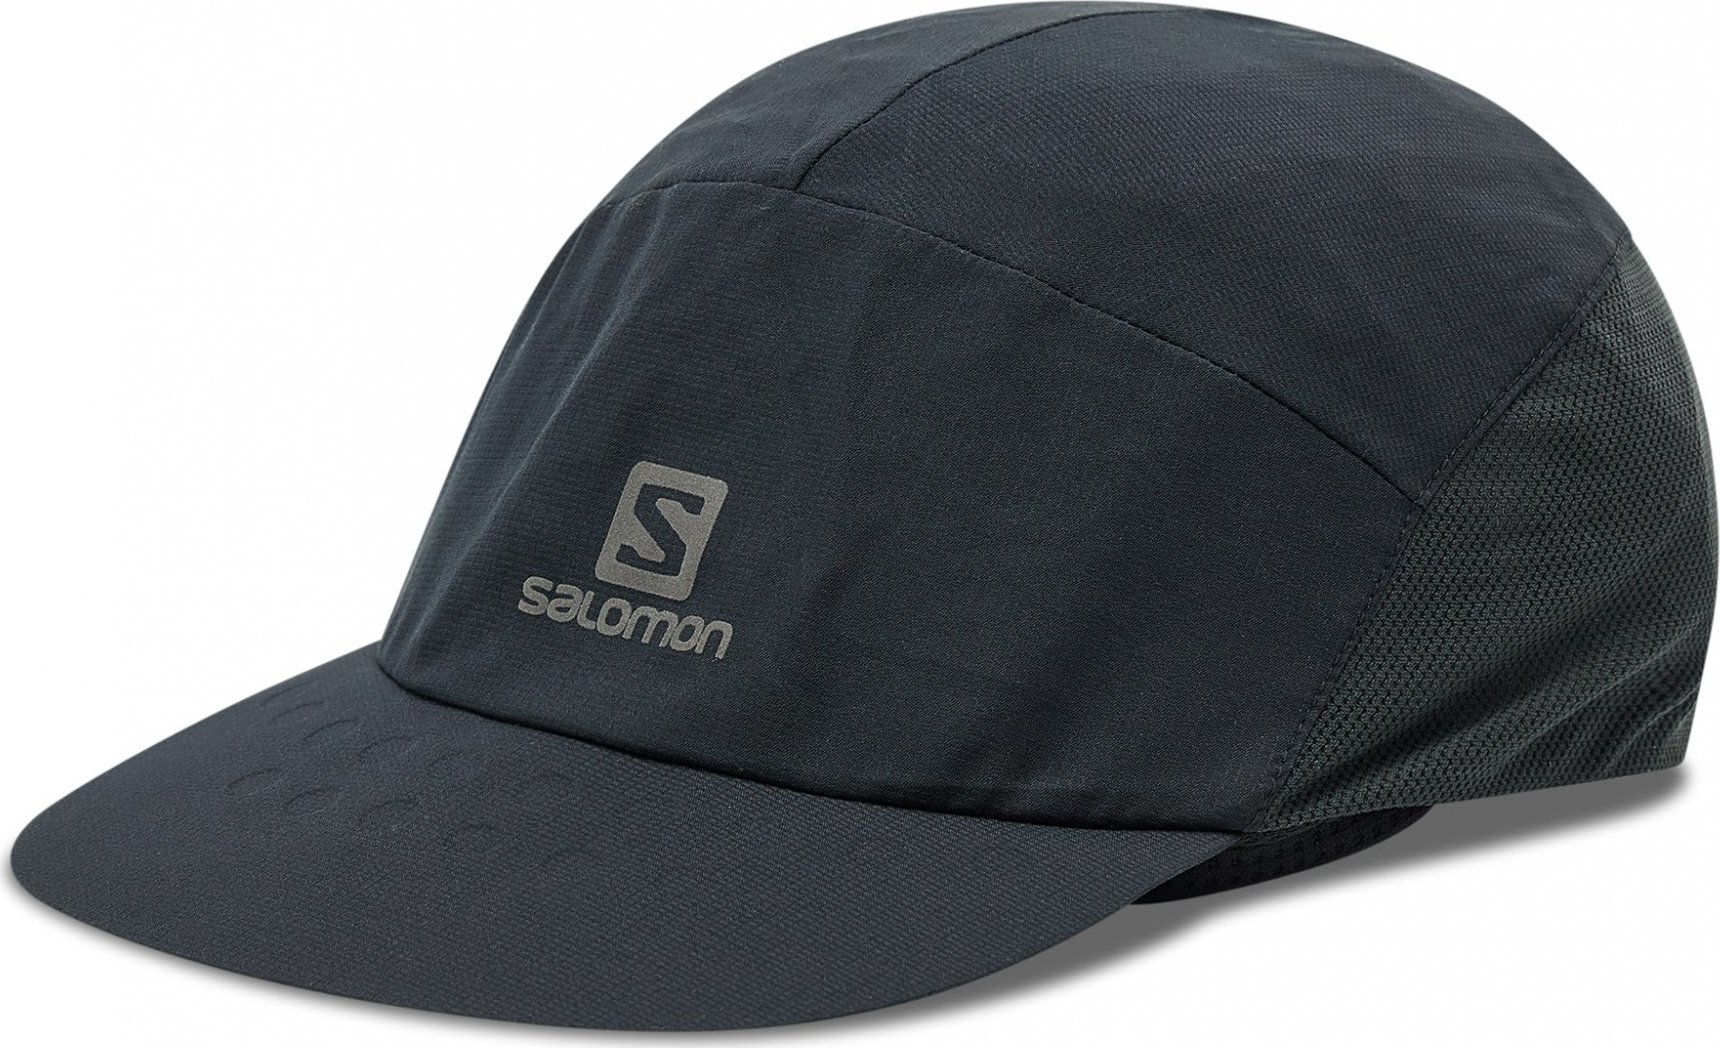 Salomon Xa Compact Cap C10379 10 GO